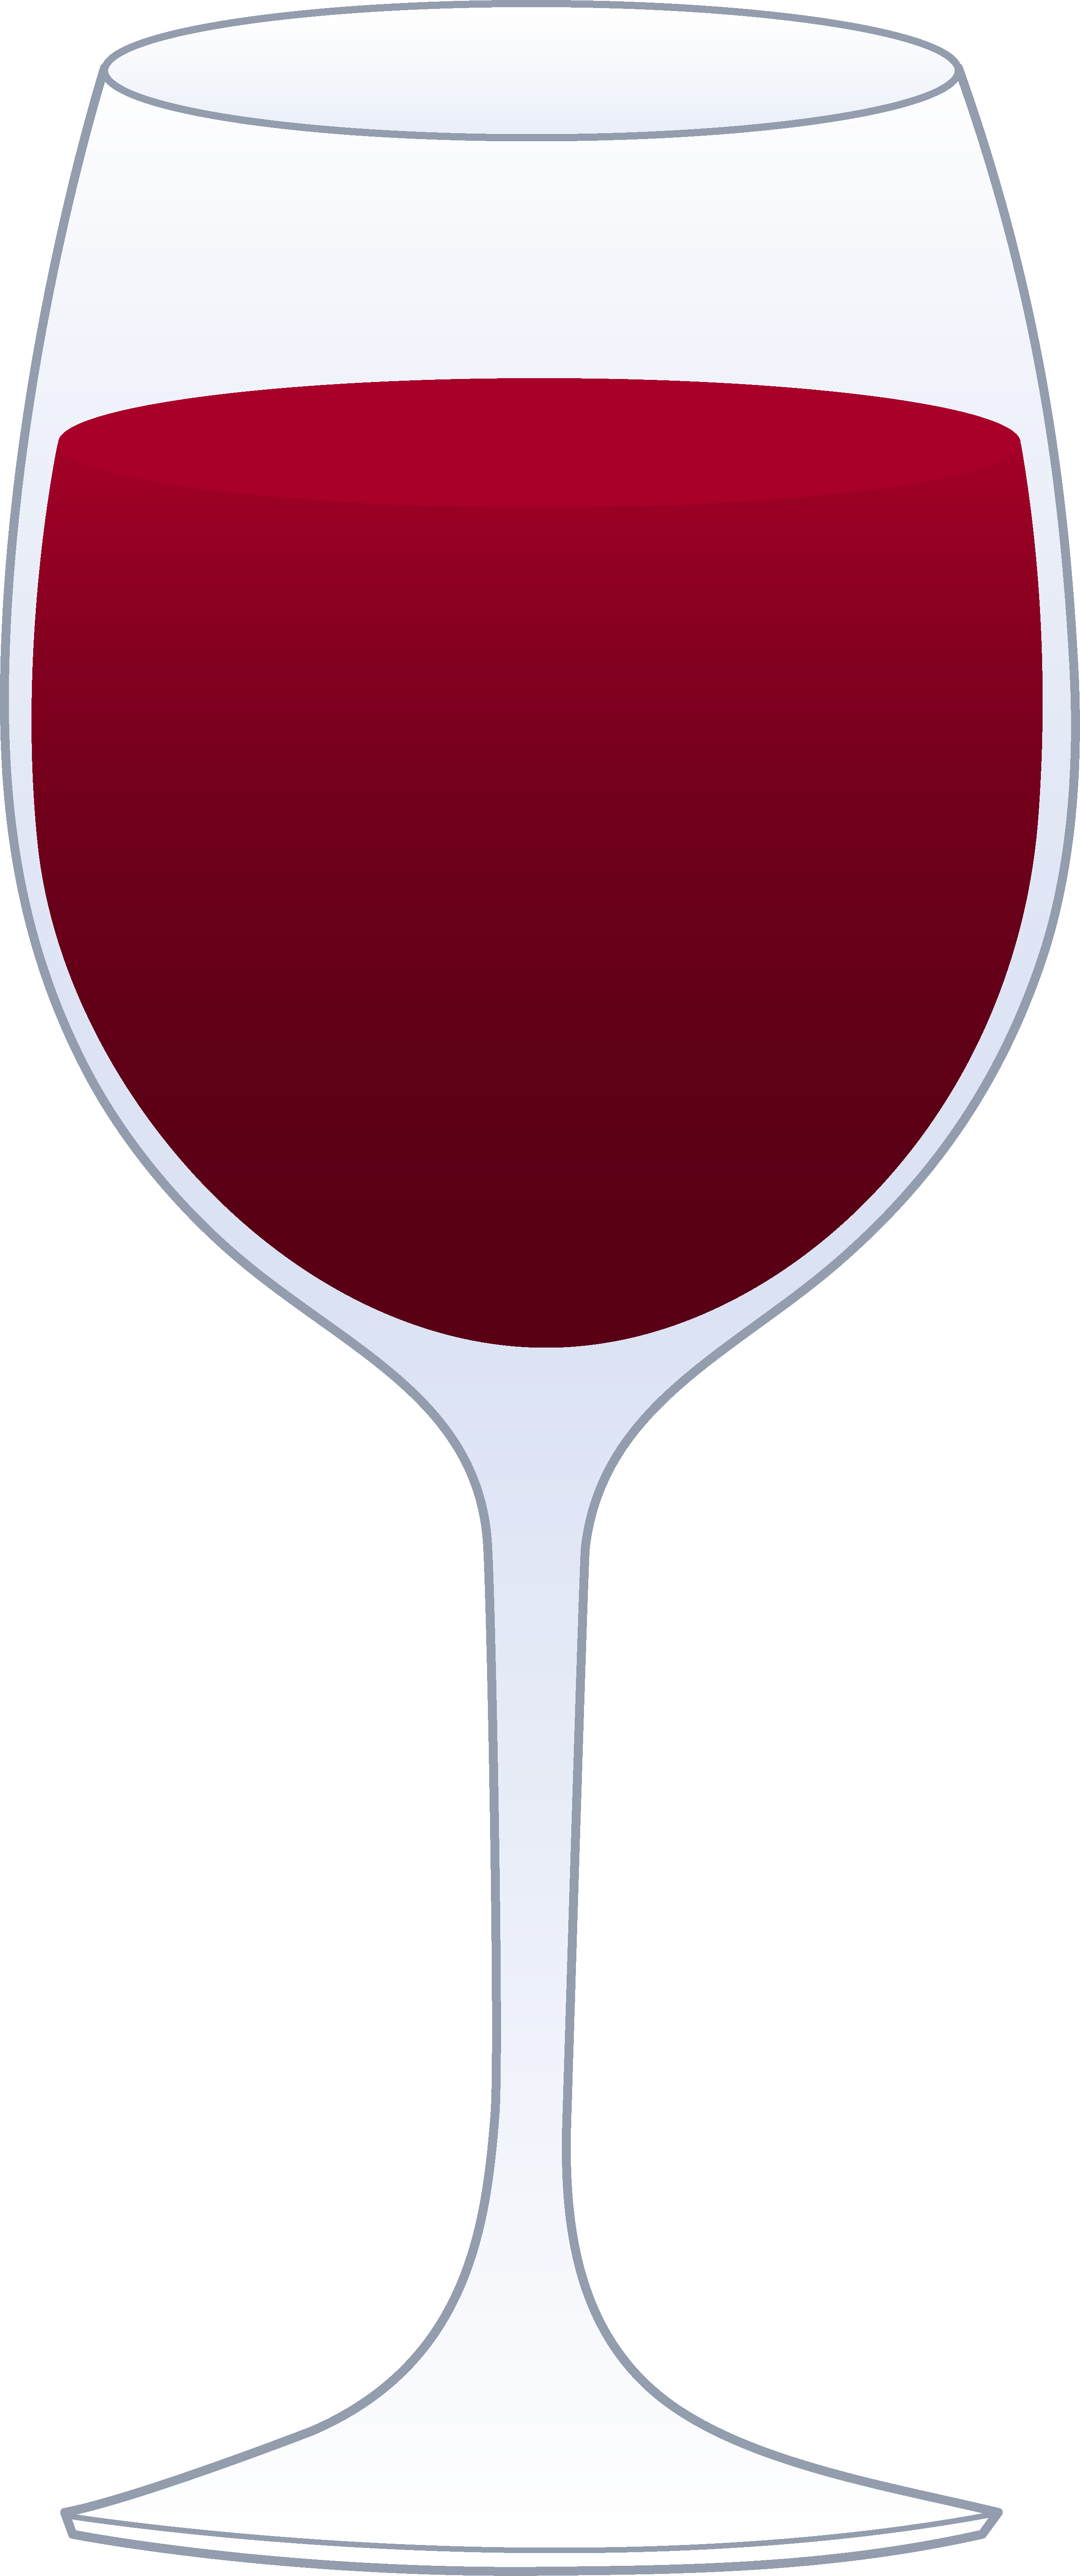 Clip Art Wine Glass Cartoon : Wine glass cartoon illustration isolated